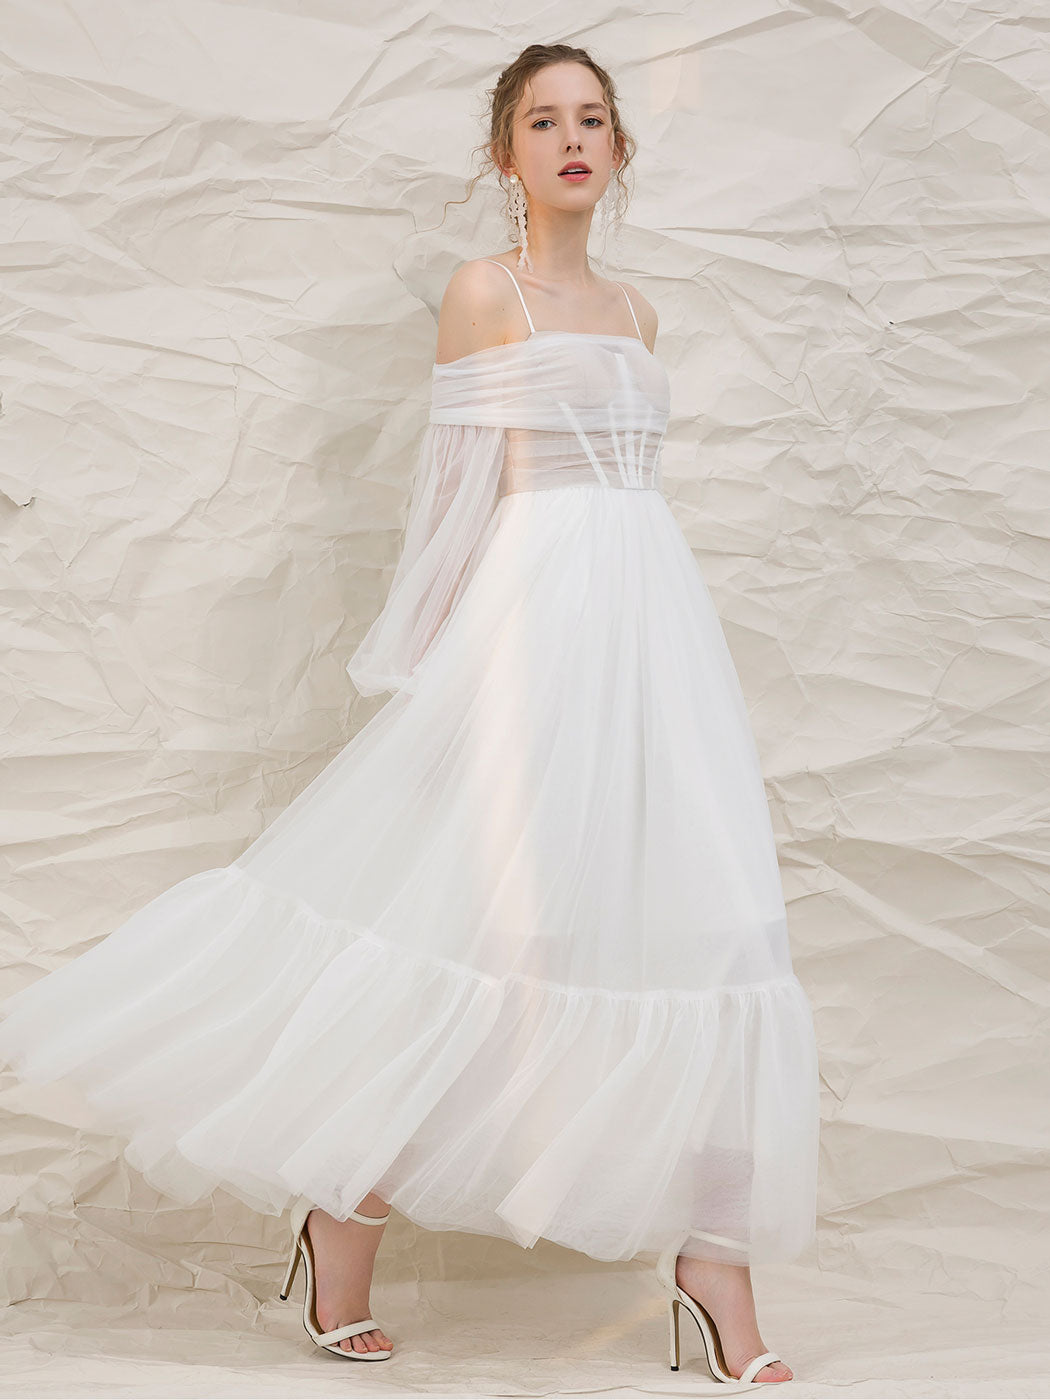 Aline Tea Length White Prom Dresses, White Formal Graduation Dresses